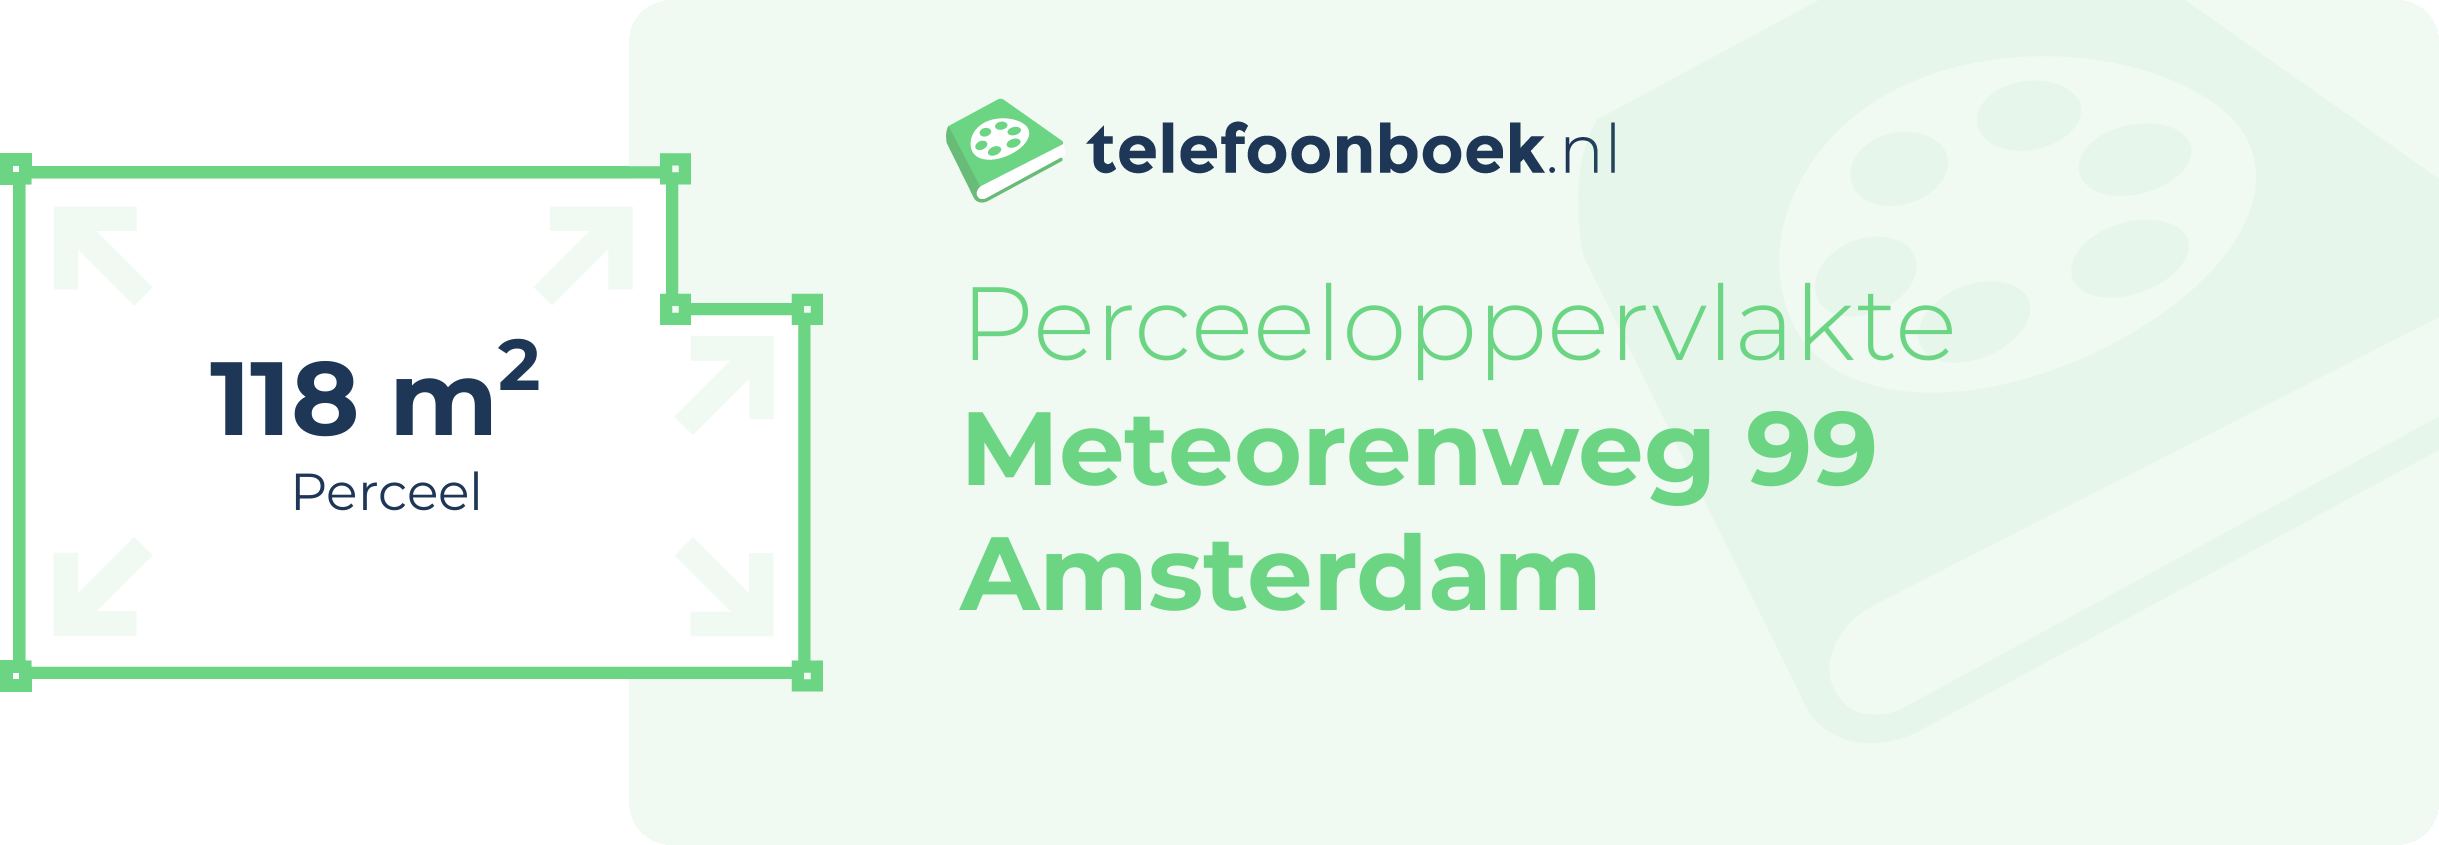 Perceeloppervlakte Meteorenweg 99 Amsterdam